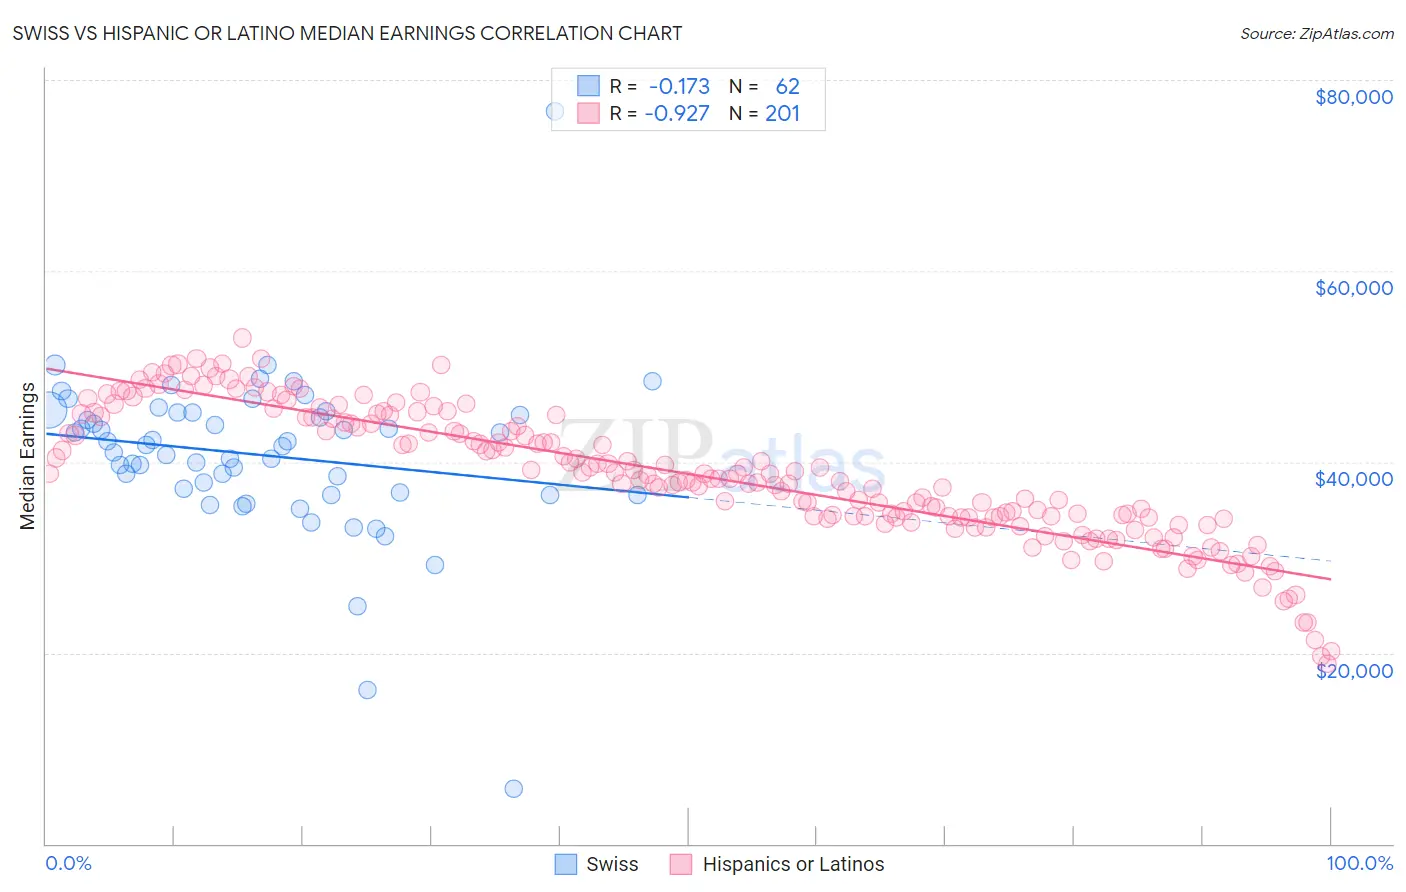 Swiss vs Hispanic or Latino Median Earnings